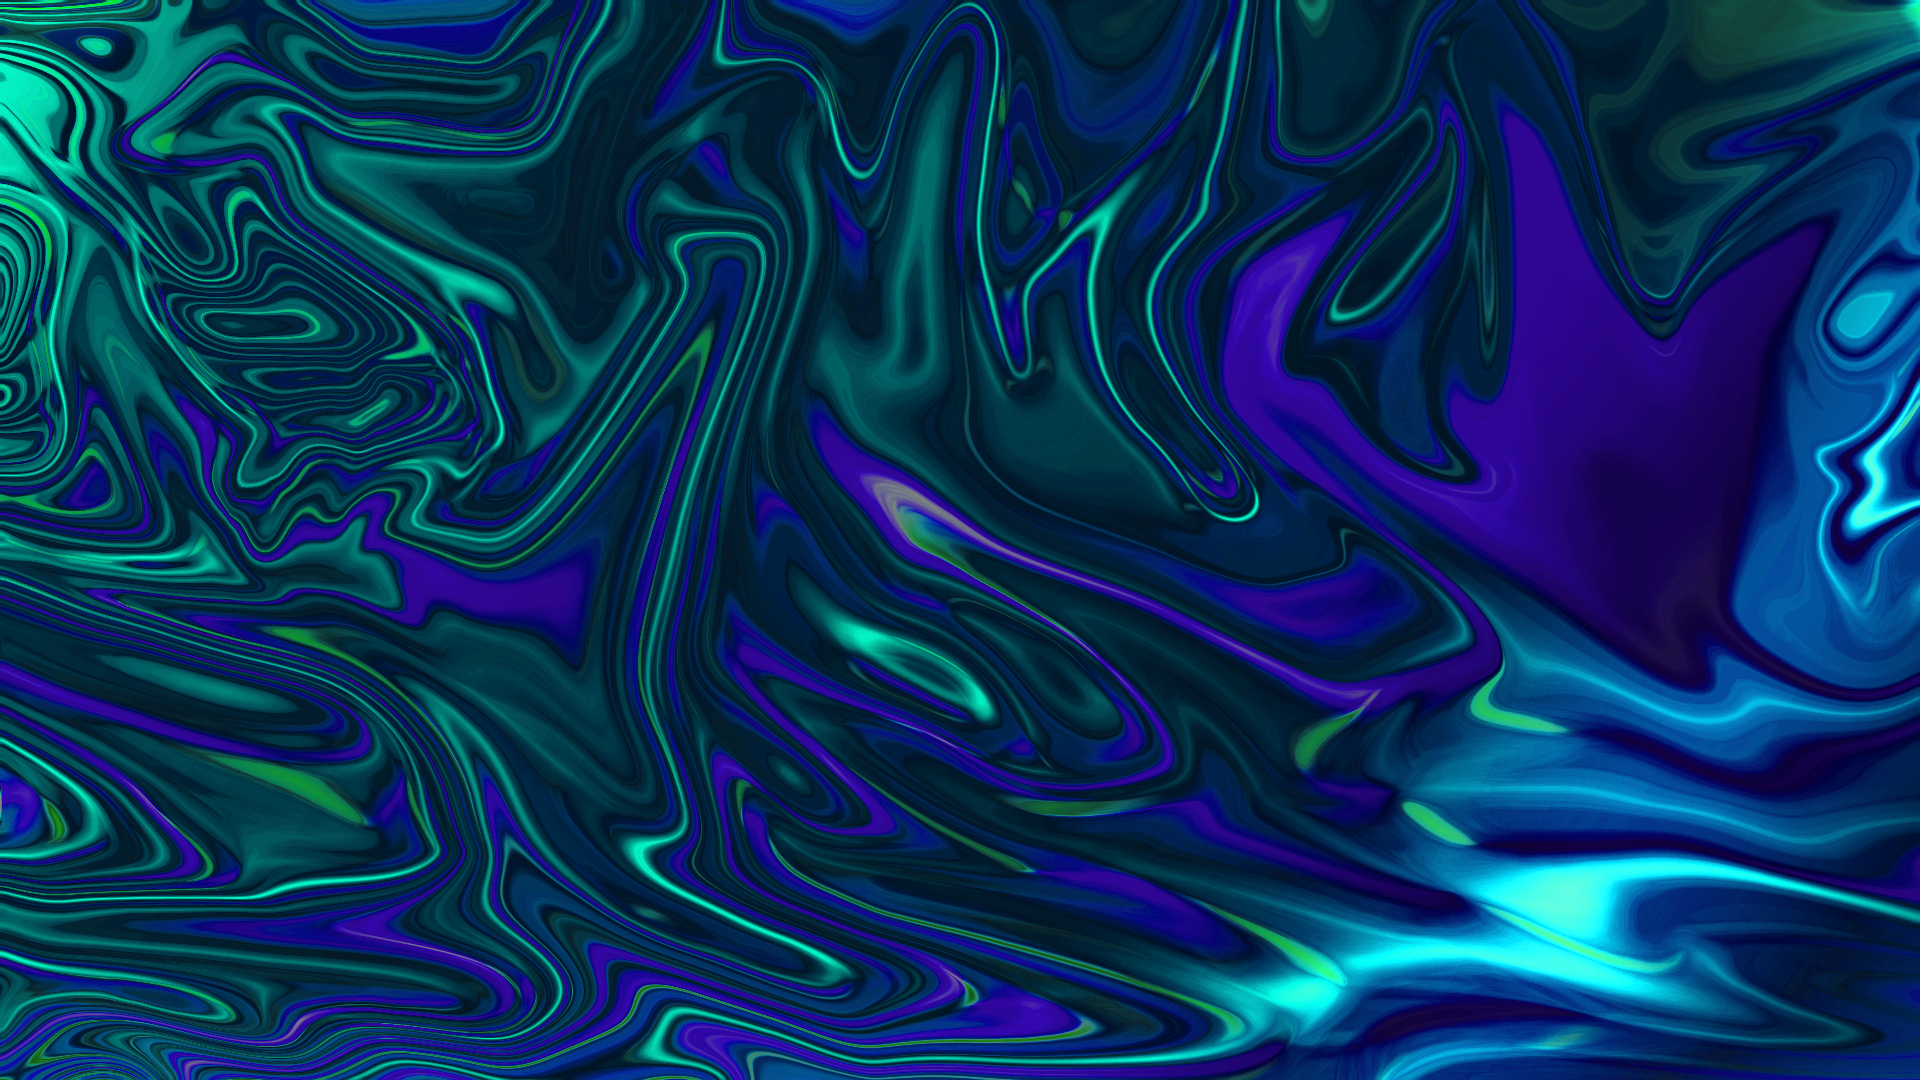 1920x1080 Green, Purple and Blue Liquefied Swirl Art by lonewolf6738